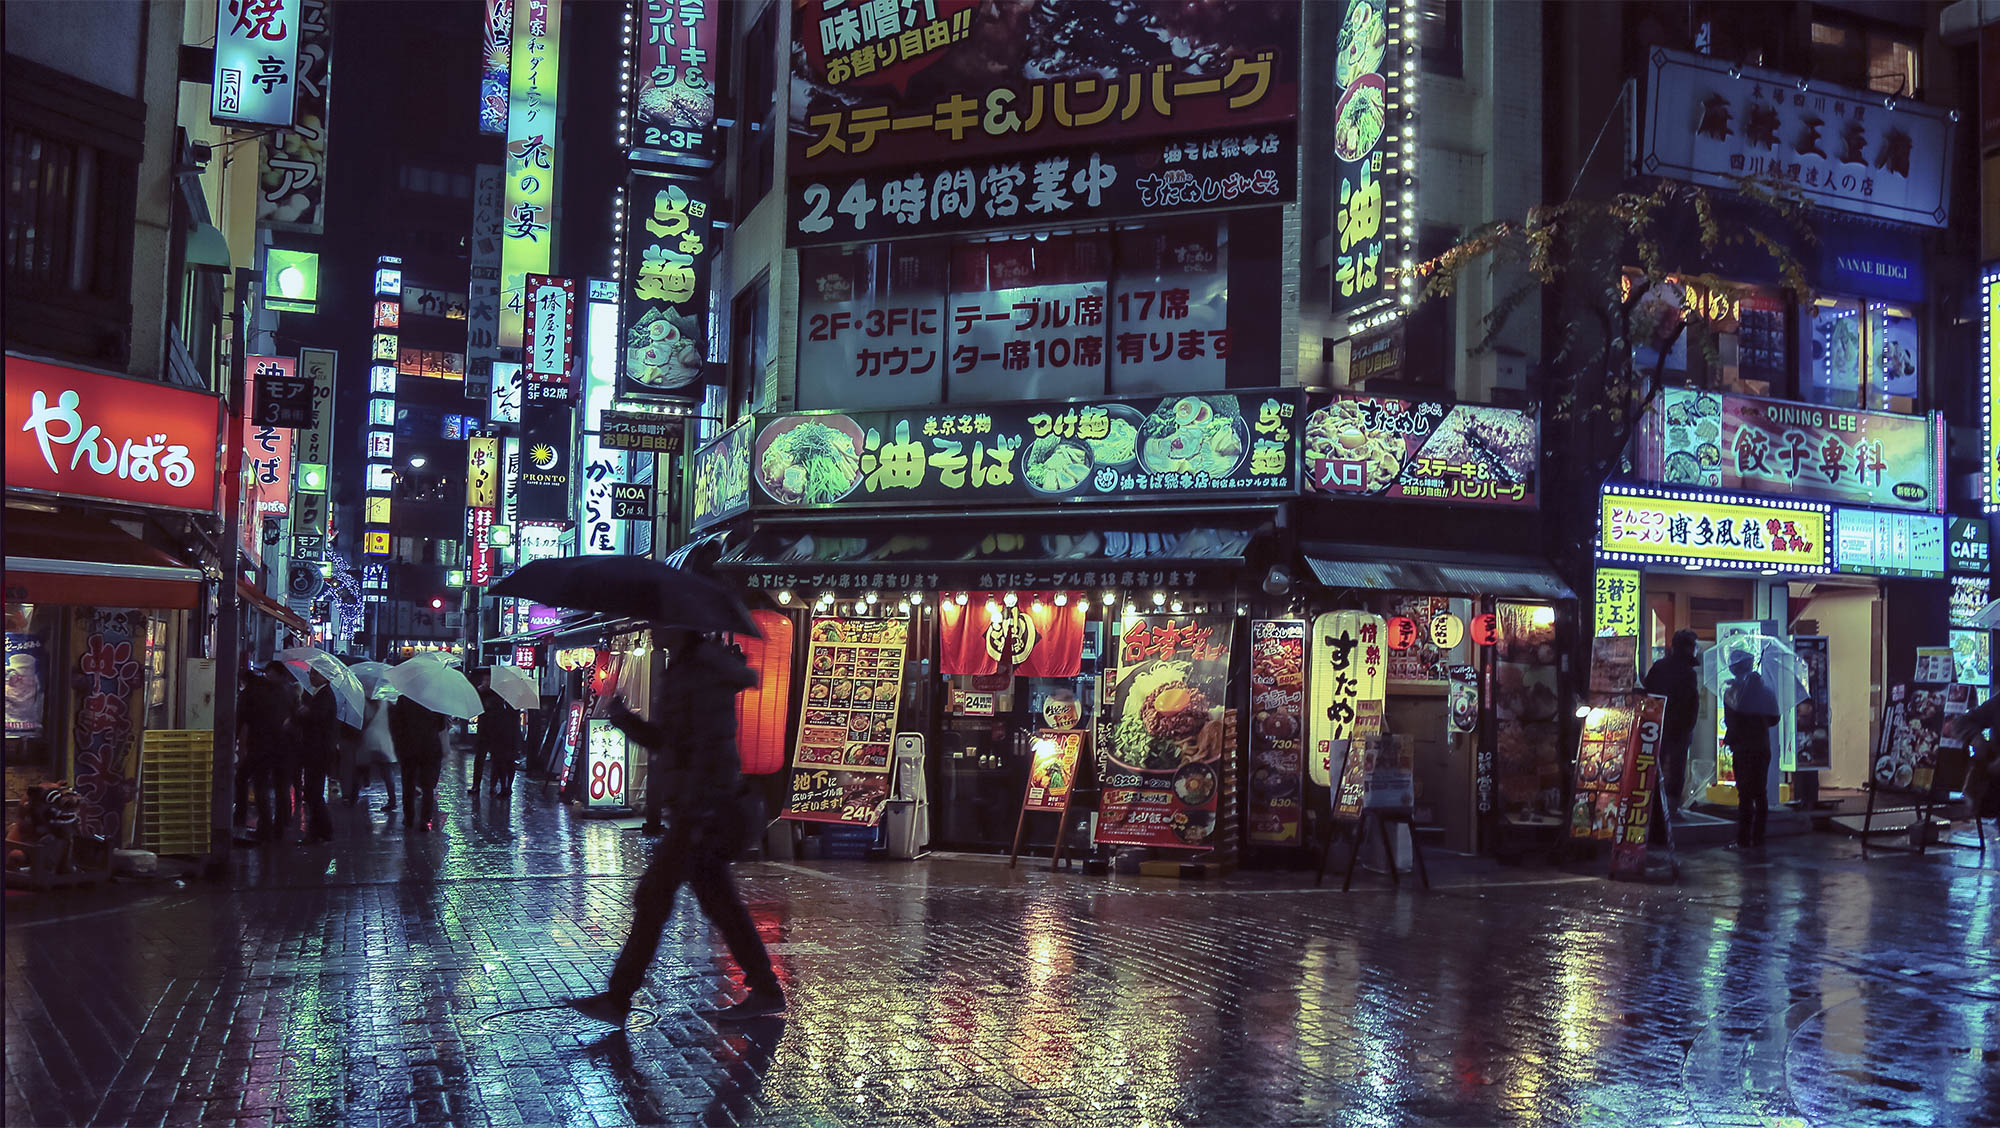 People 2000x1128 neon reflection rain umbrella Japan wet street night marquee